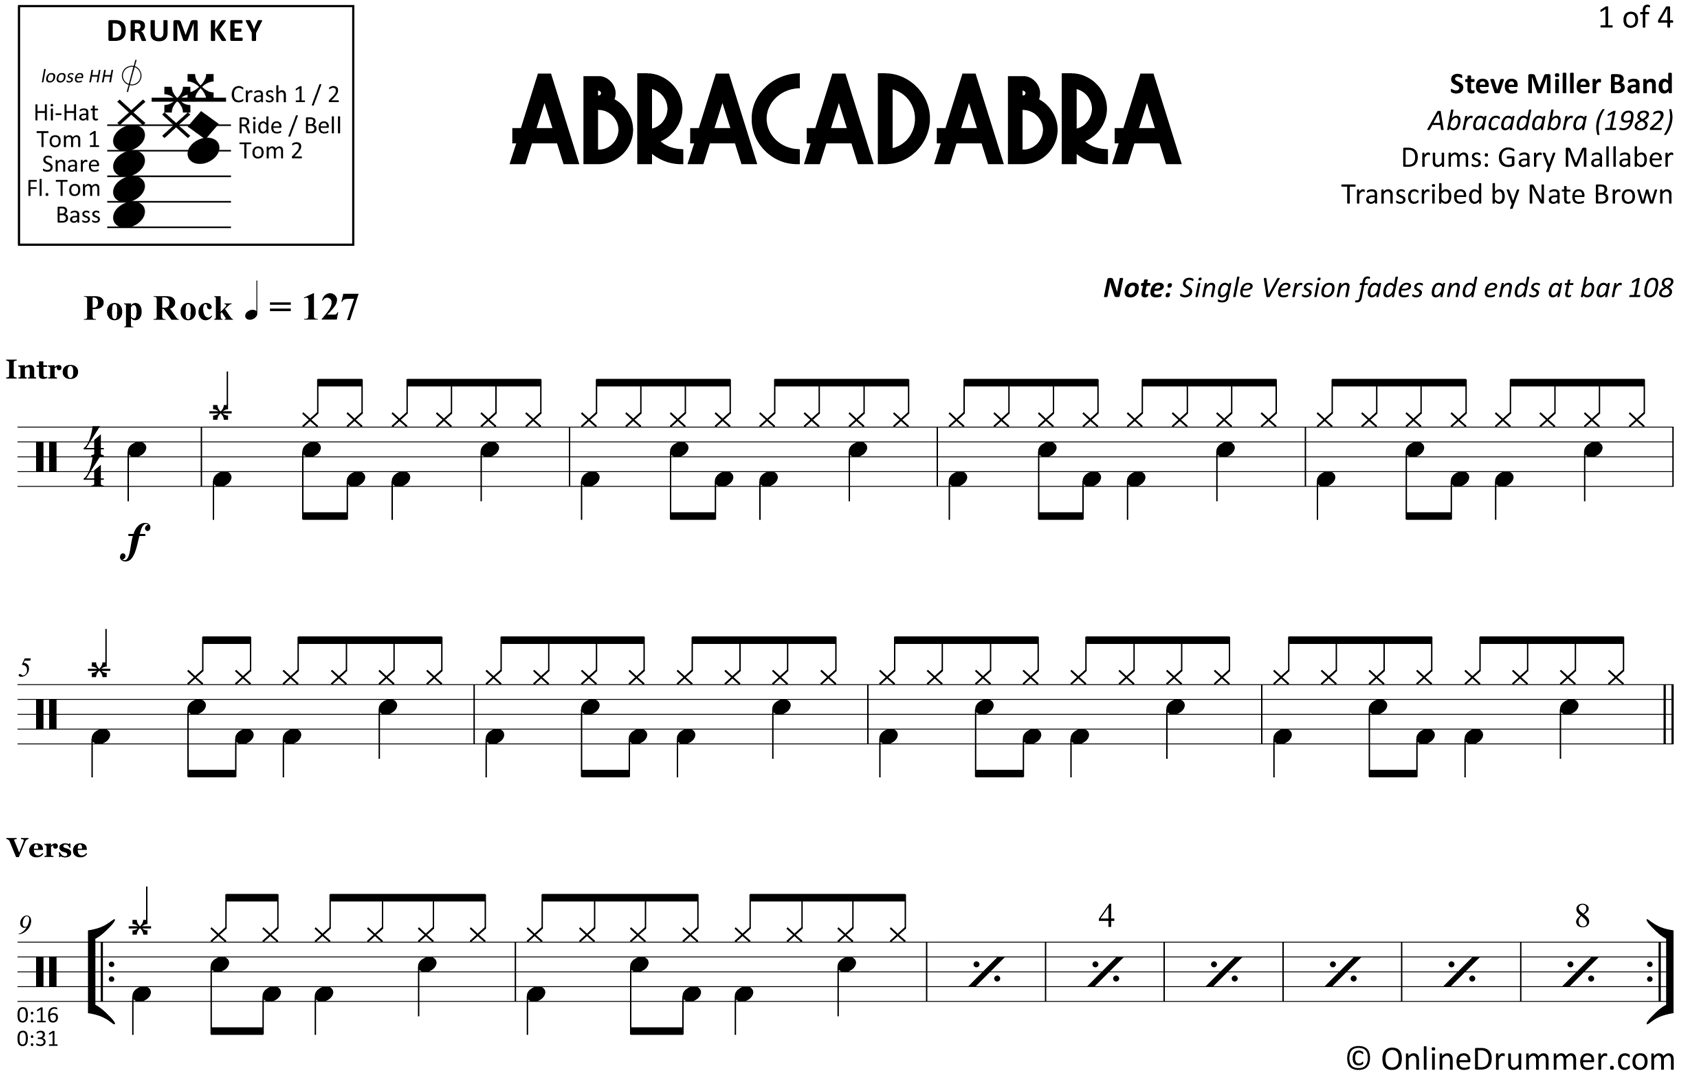 Abracadabra - Steve Miller Band - Drum Sheet Music